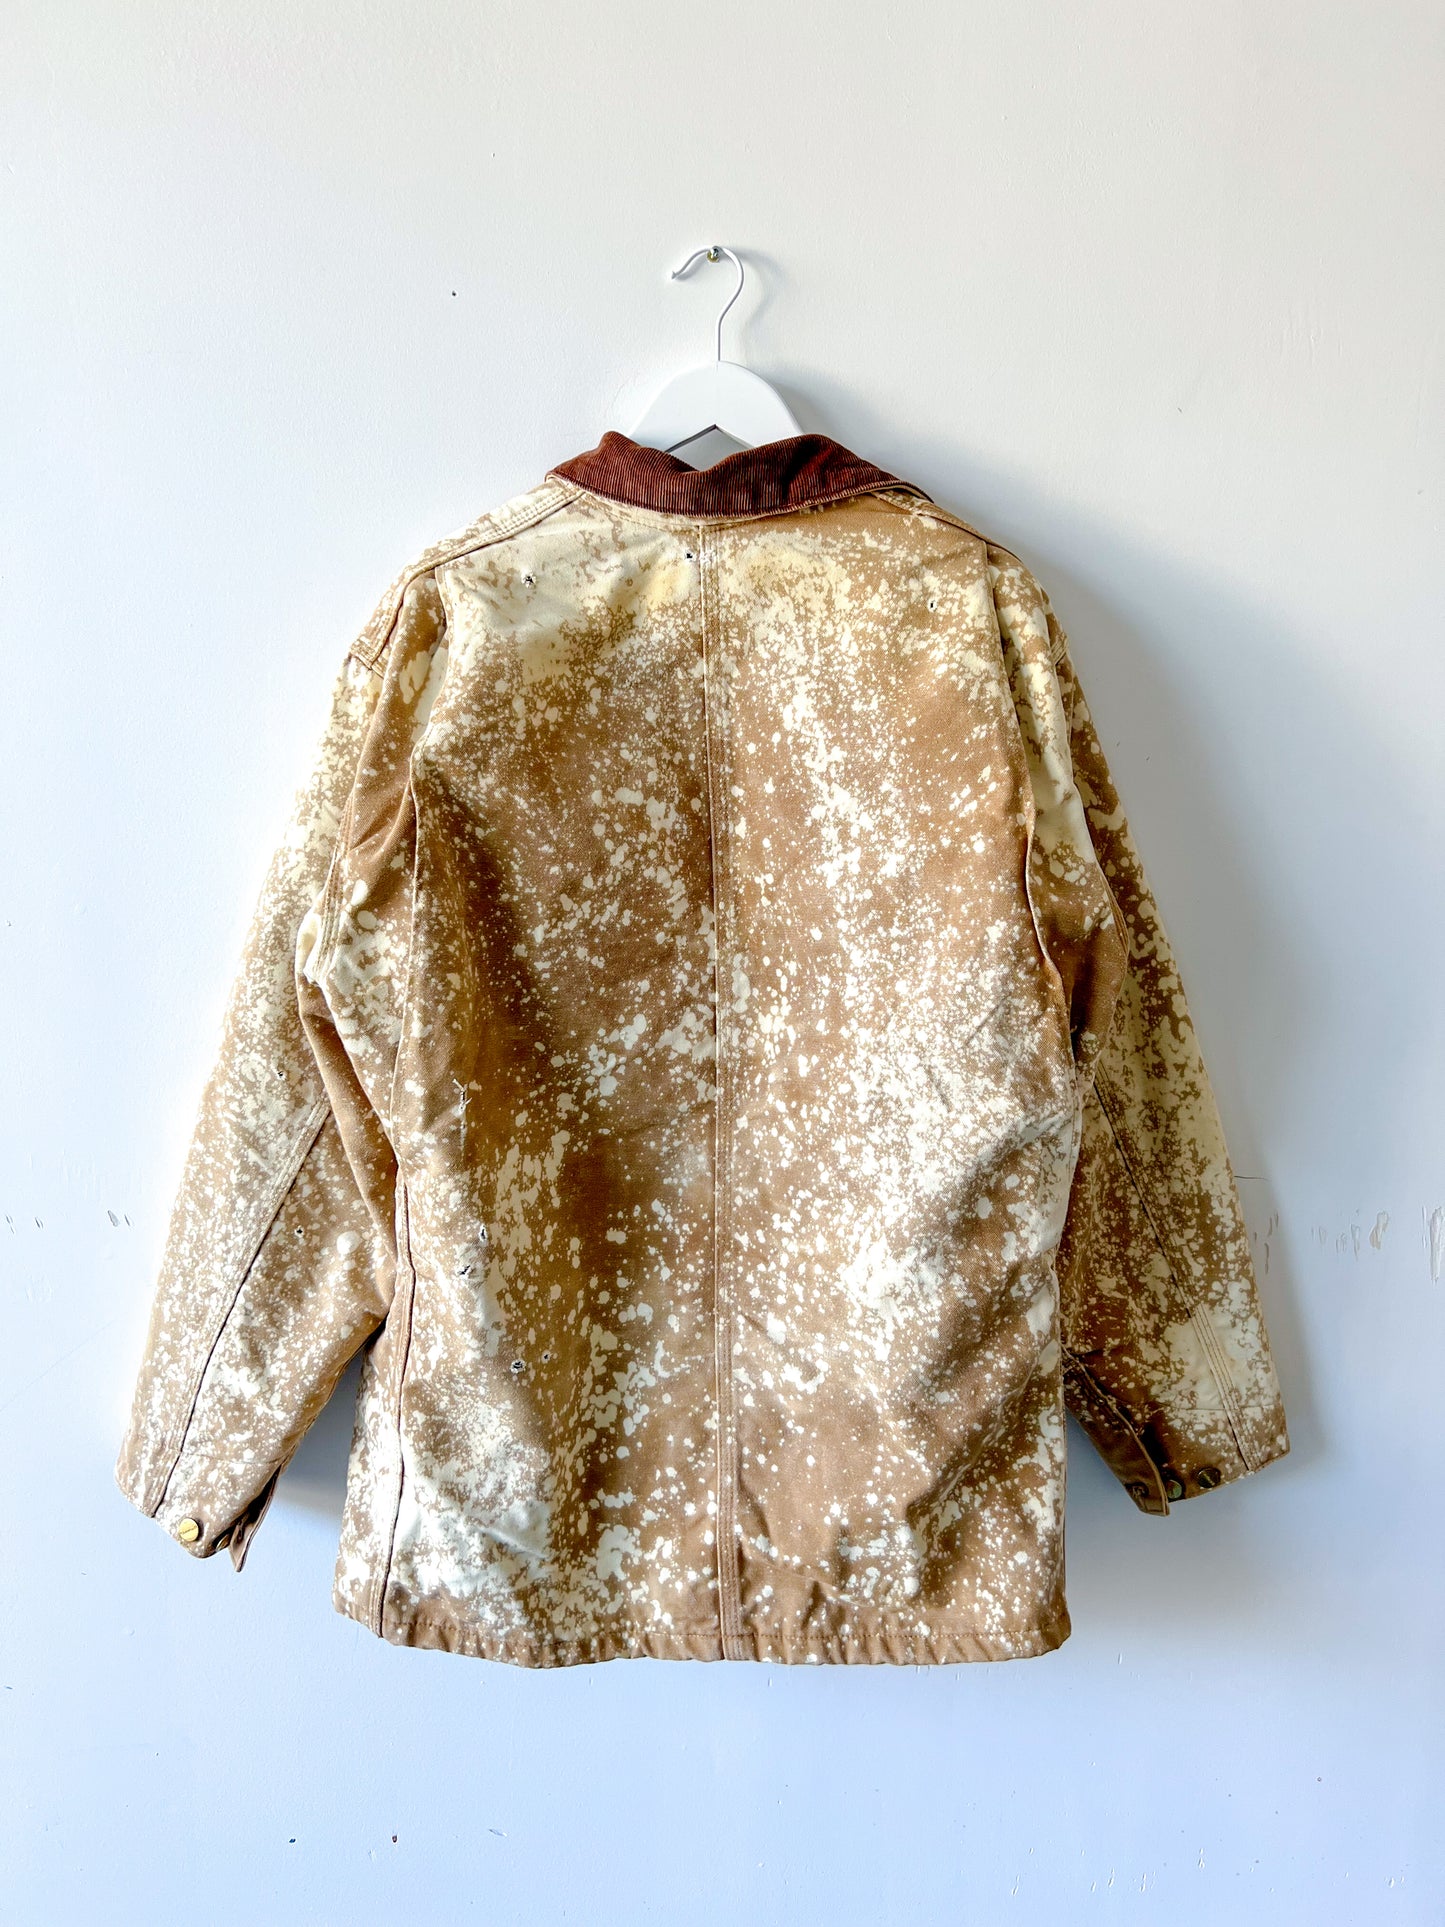 FLORIDA - Vintage 90s Carhartt Acid Washed Blanket Lined Chore Coat - Tan, Beige - Unisex Large